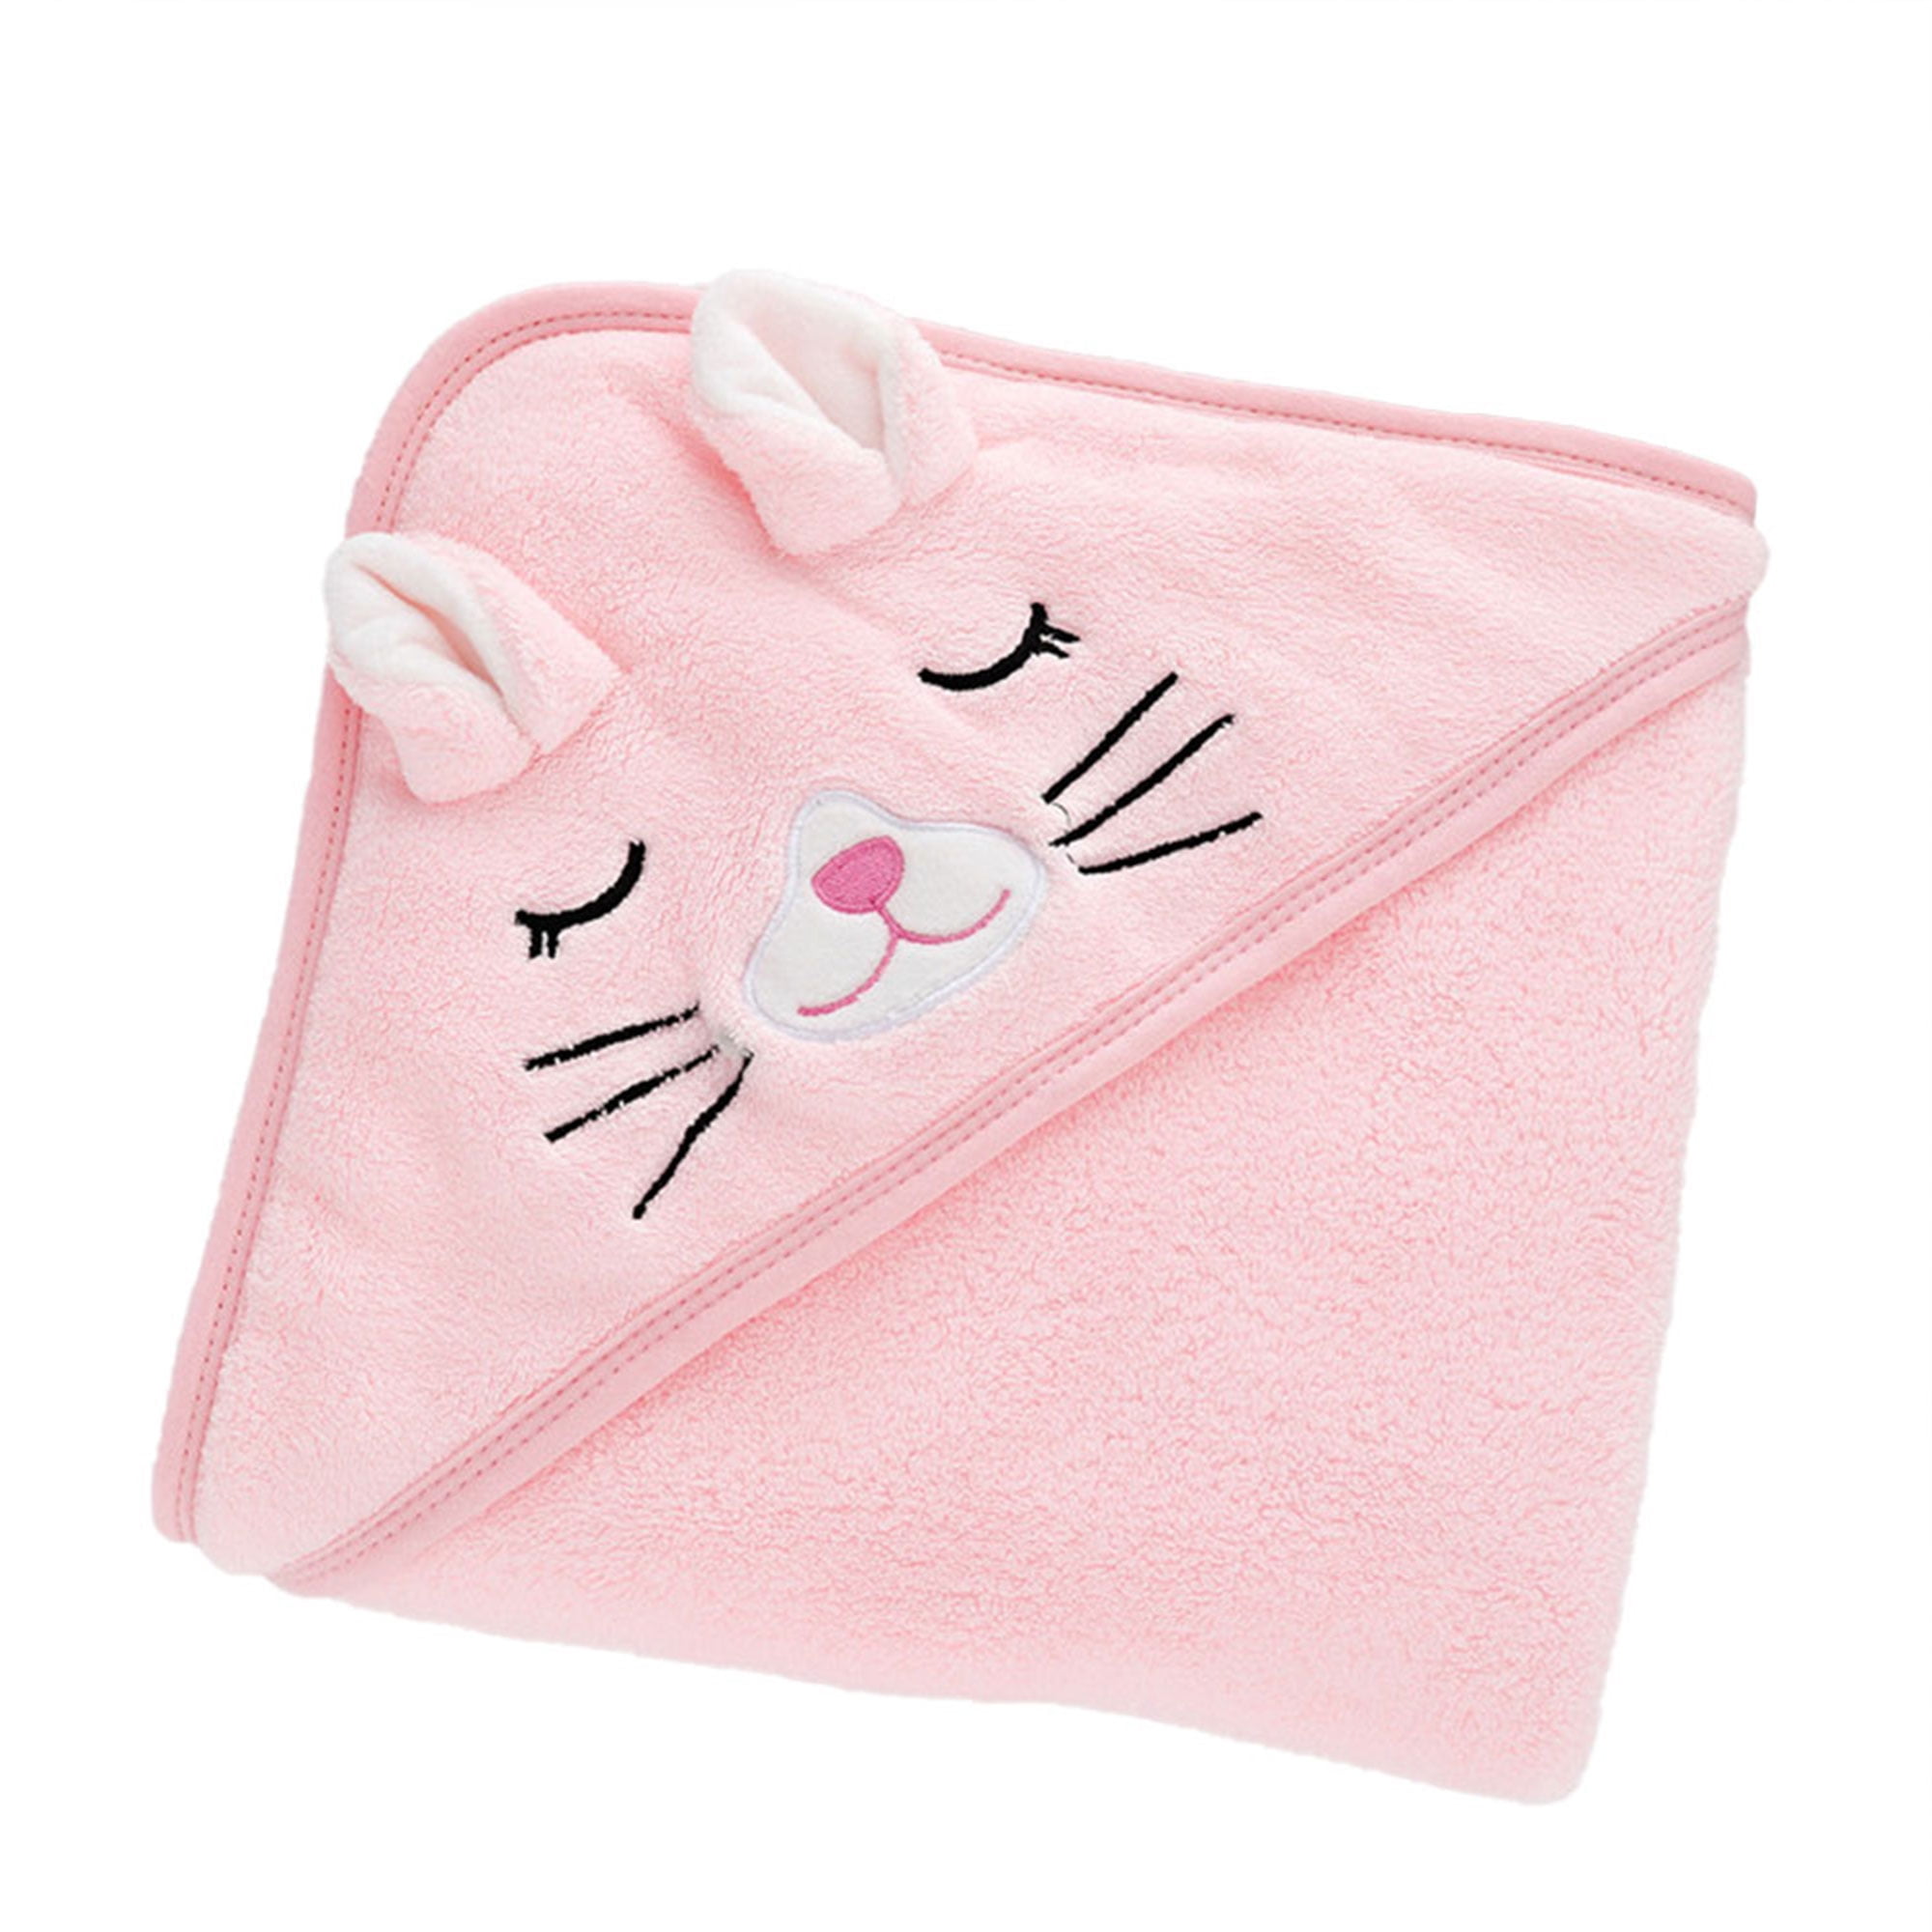 Hooded Baby Towel, Soft Coral Fleece Animal Bath Blankets for Newborn Girls  Boys, Baby Wrap Towel Washcloth 